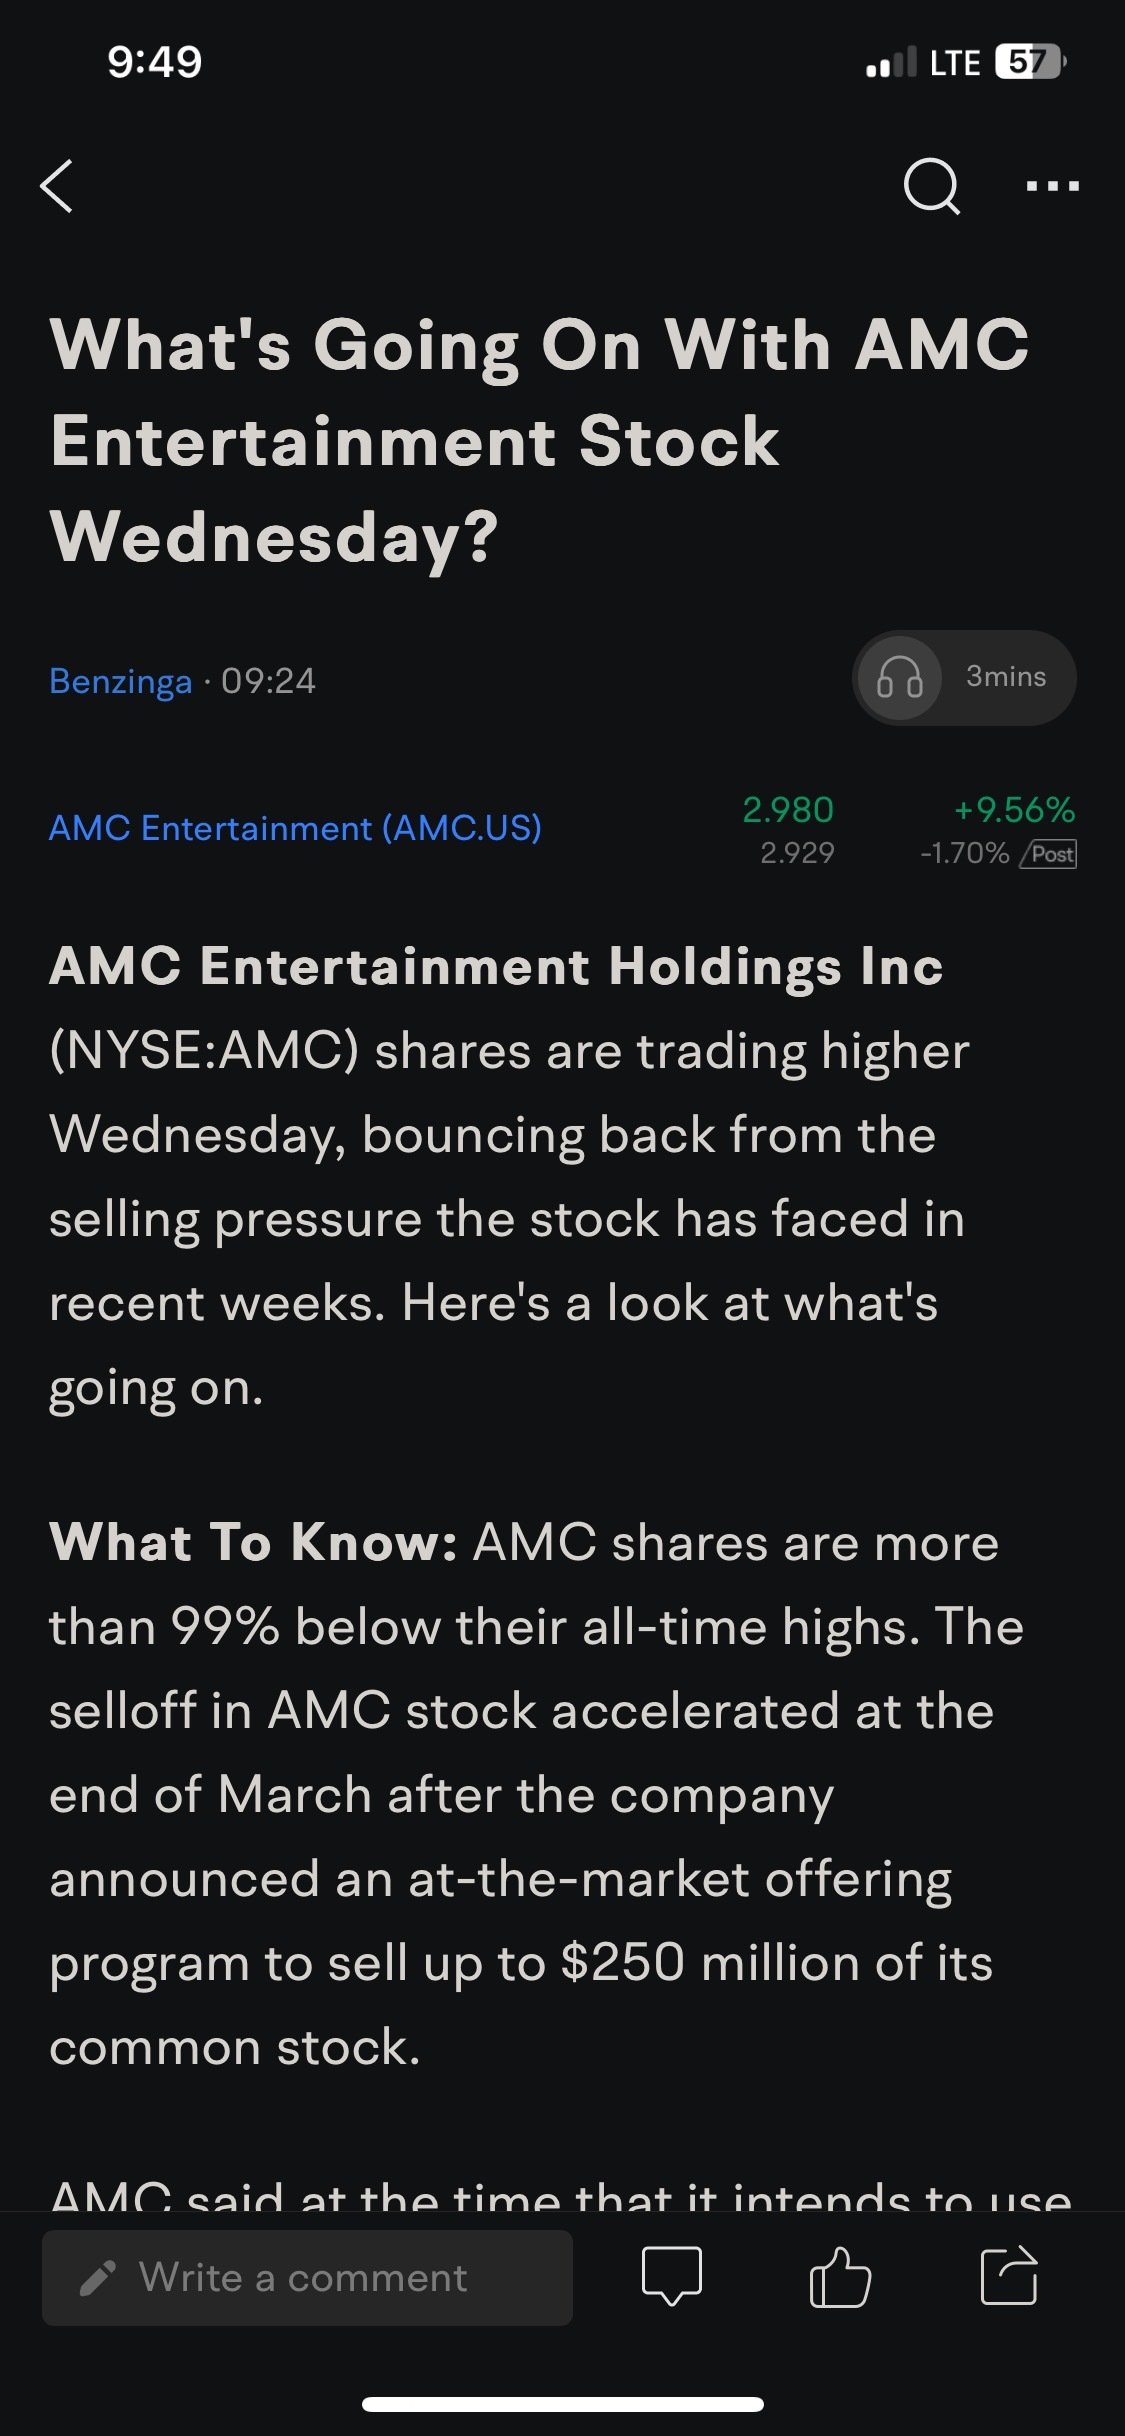 $AMC院線 (AMC.US)$ 完全不偏見的 Benzinga，在完全公正的新聞報導中提供如何簡報 AMC 股票週三發生了什麼情況的中段。在任何其他股票故事中，不會看到它們如此「有幫助」。